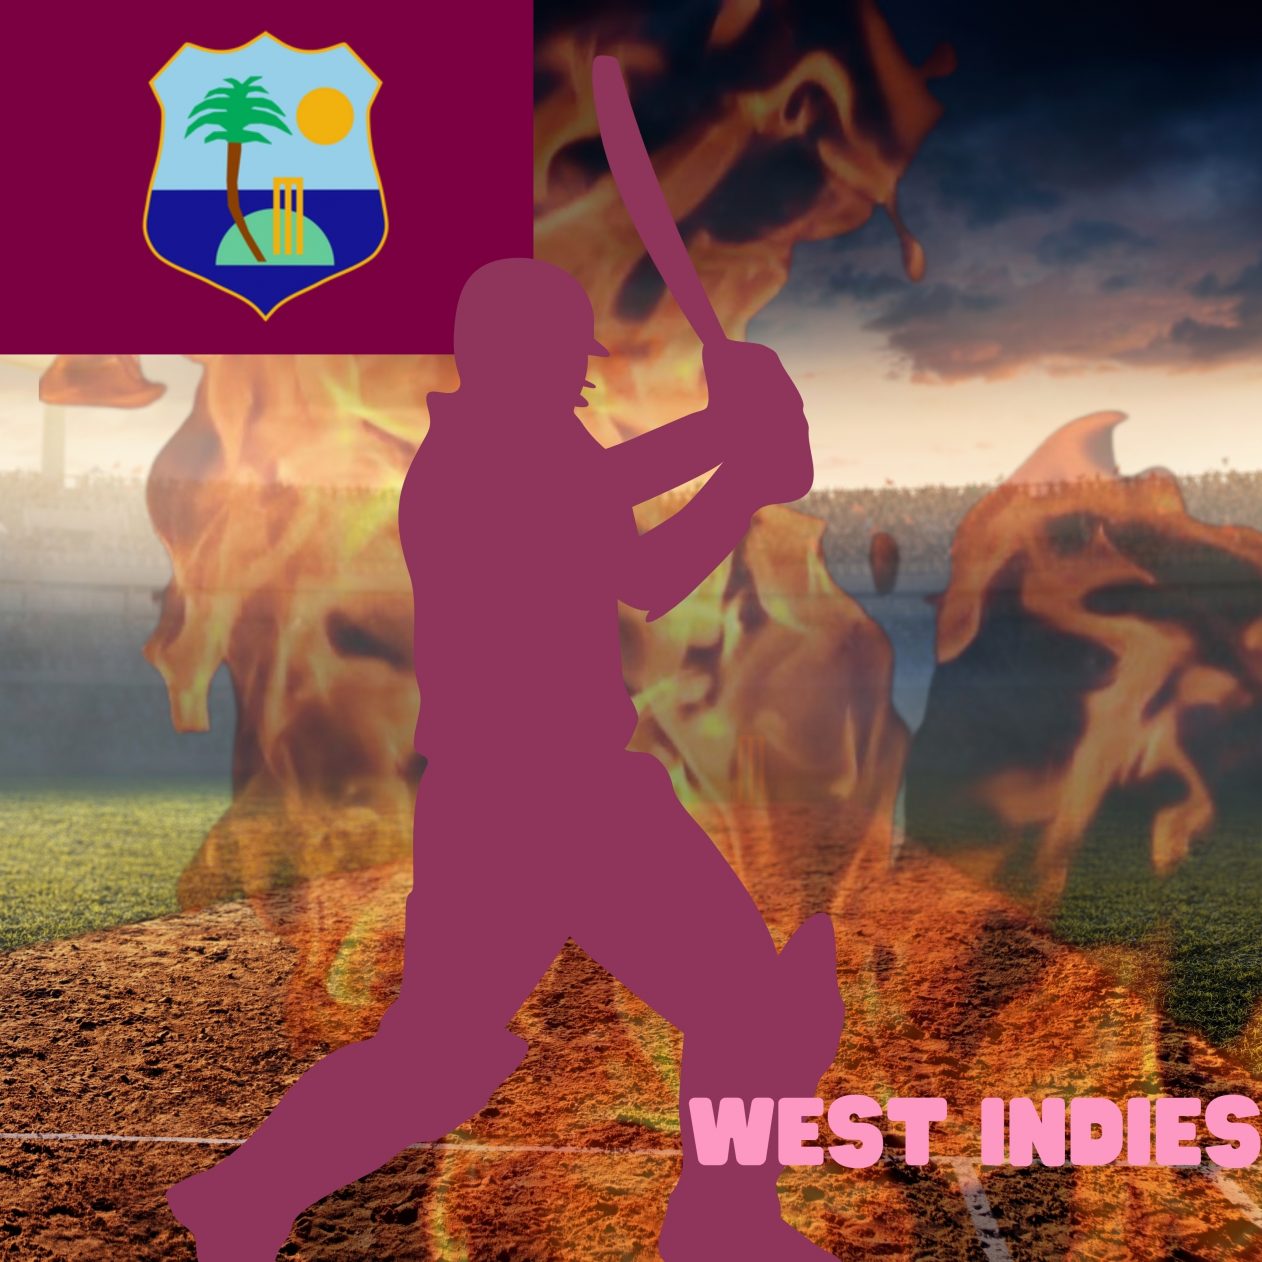 1262x1262 Parallax wallpaper 4k West Indies Cricket Stadium iPad Wallpaper 1262x1262 pixels resolution